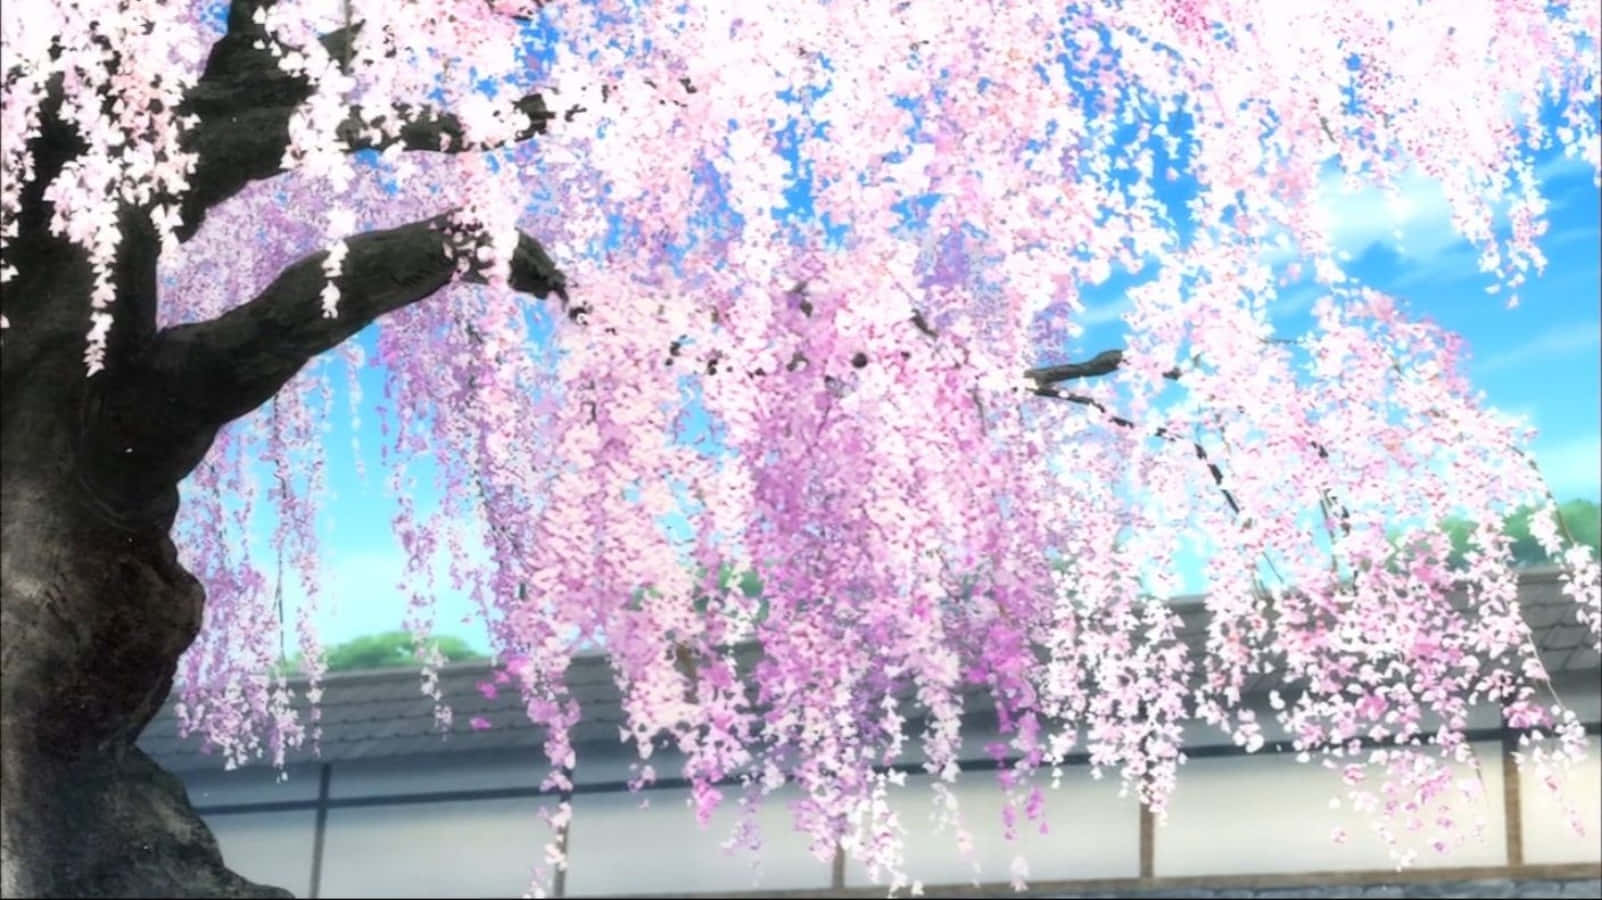 Download Sakura Anime Cherry Blossom Tree Illustration Wallpaper